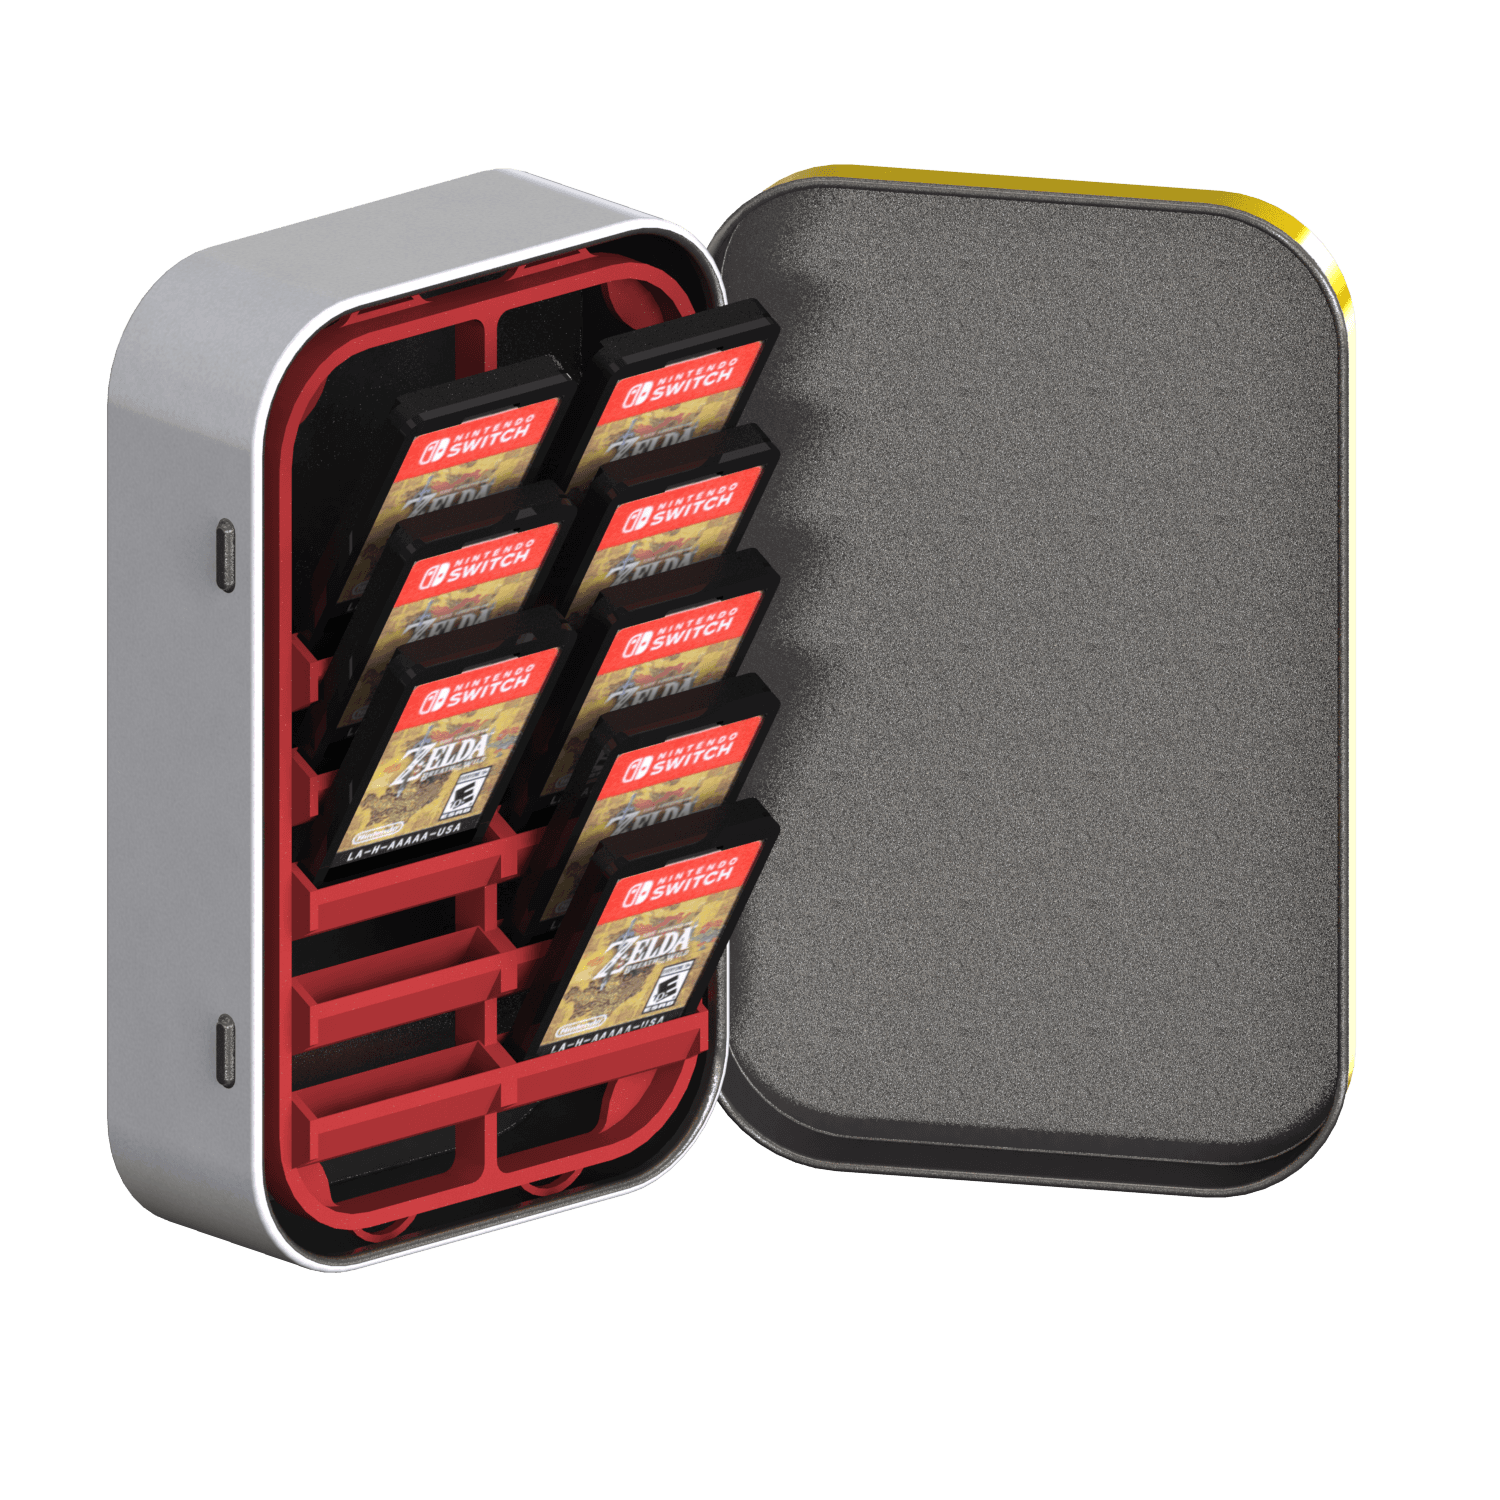 Nintendo Switch game card locker 3d model